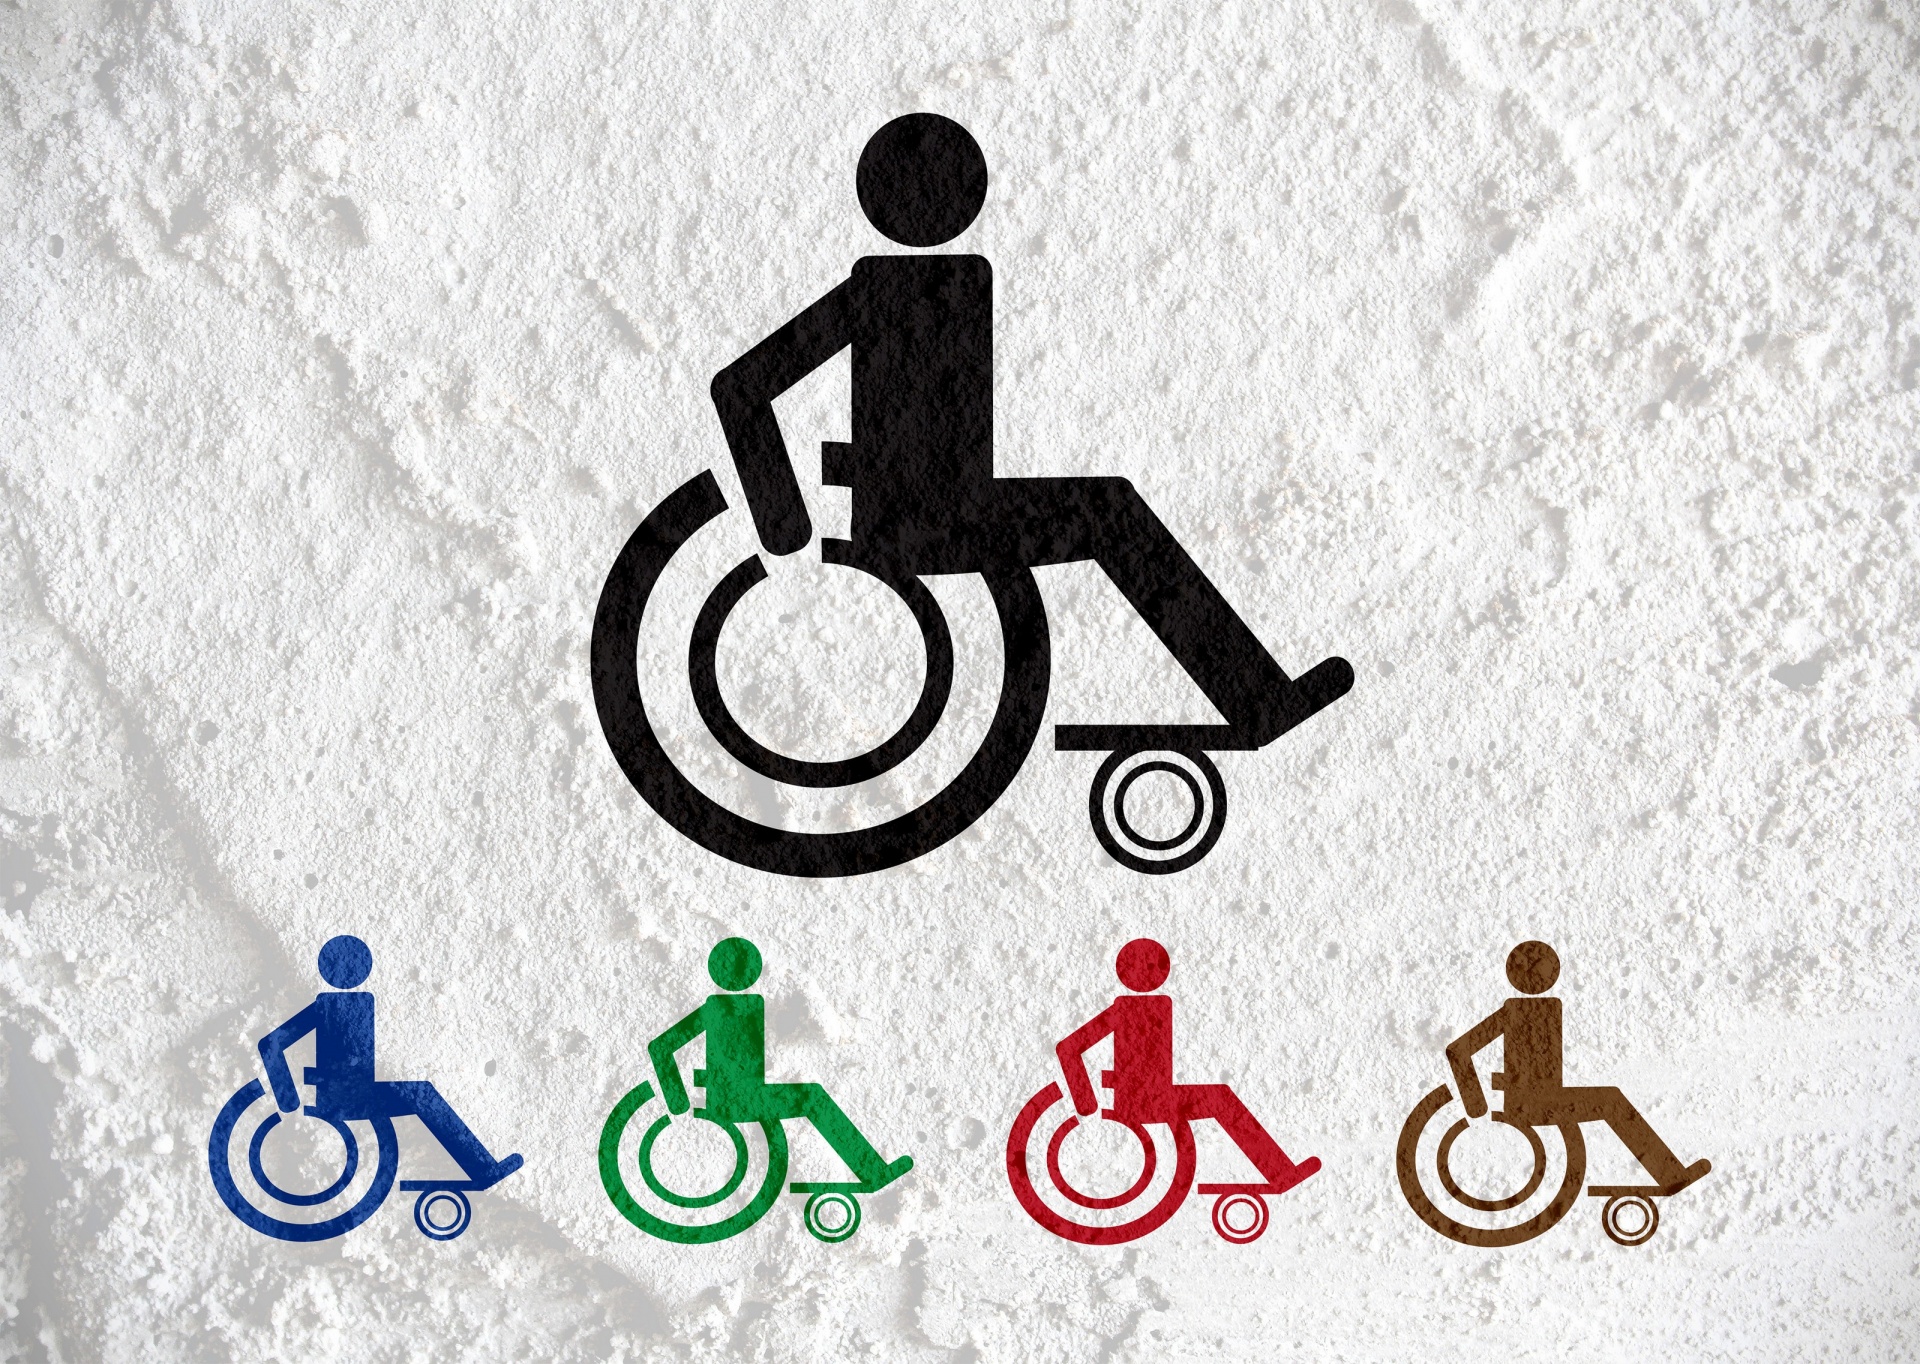 Restrooms For Wheelchair Handicap Icon